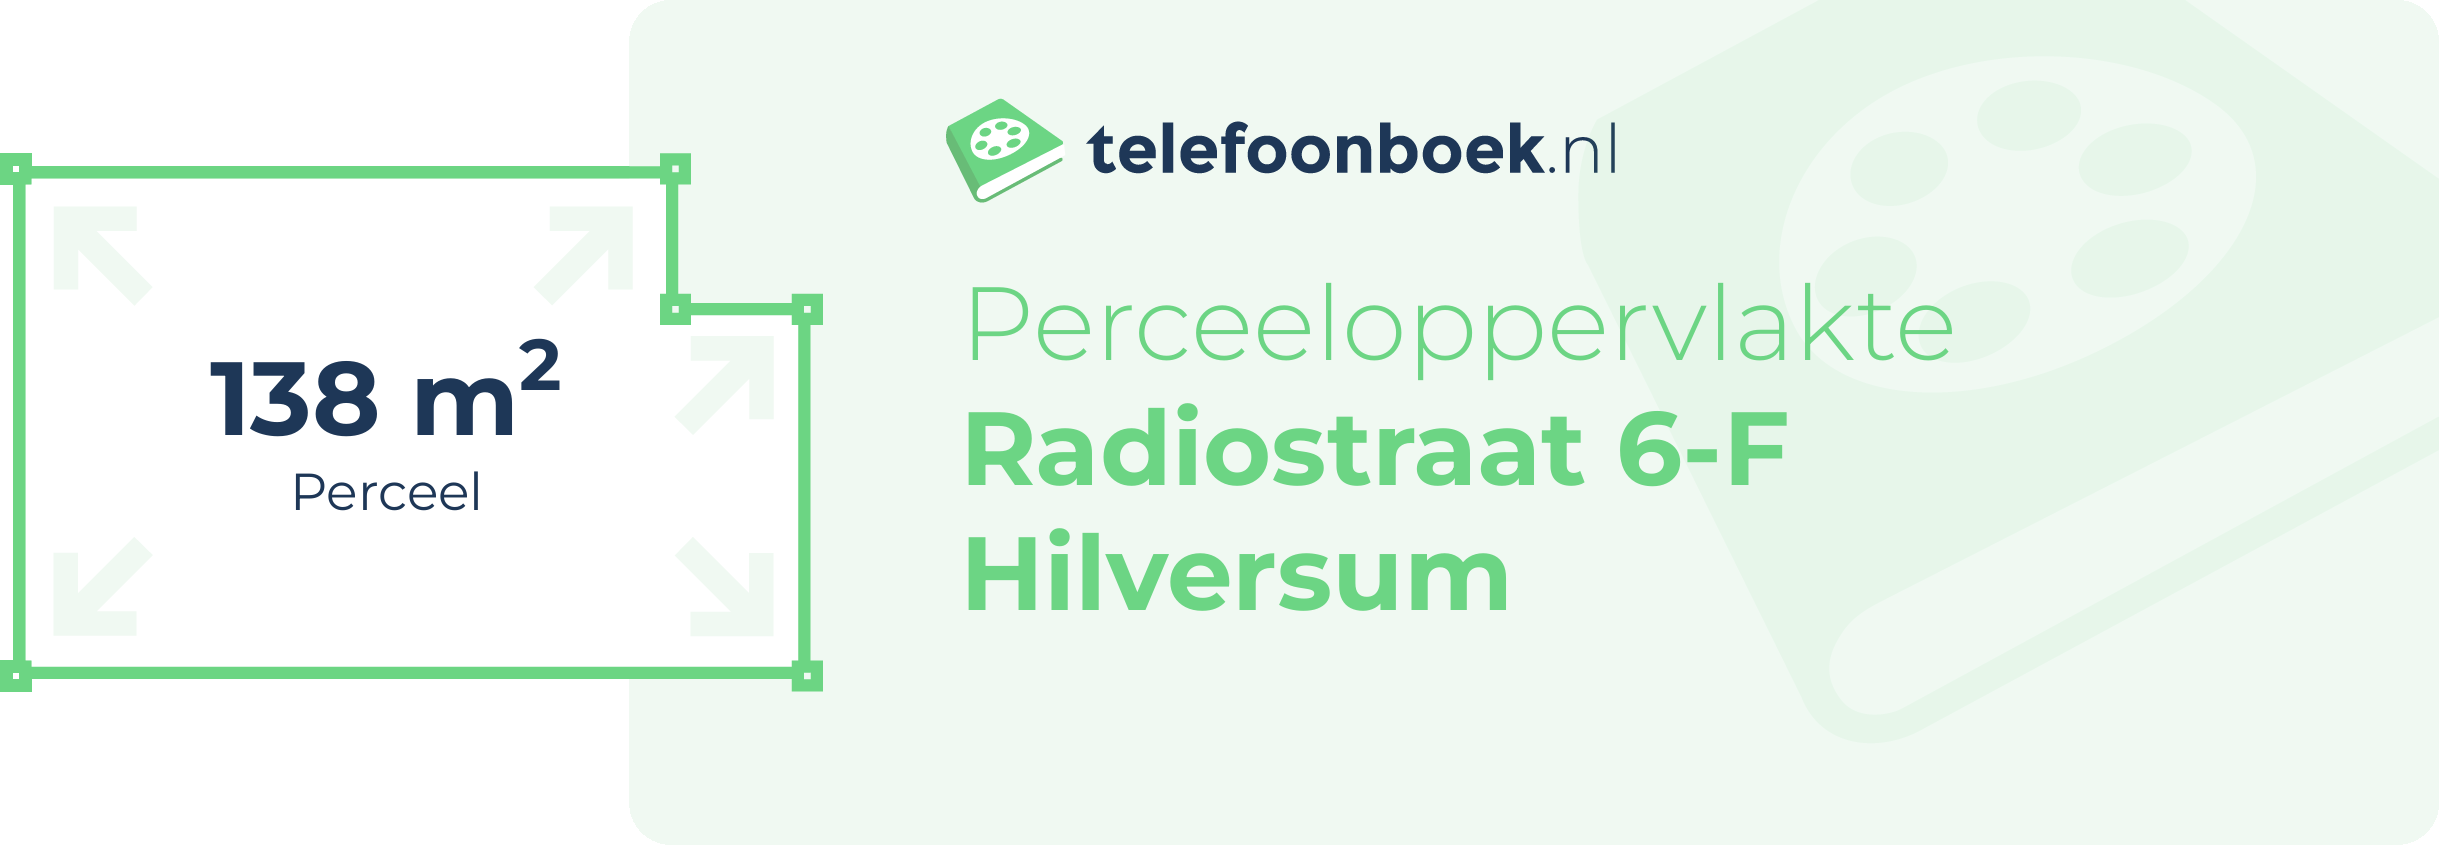 Perceeloppervlakte Radiostraat 6-F Hilversum